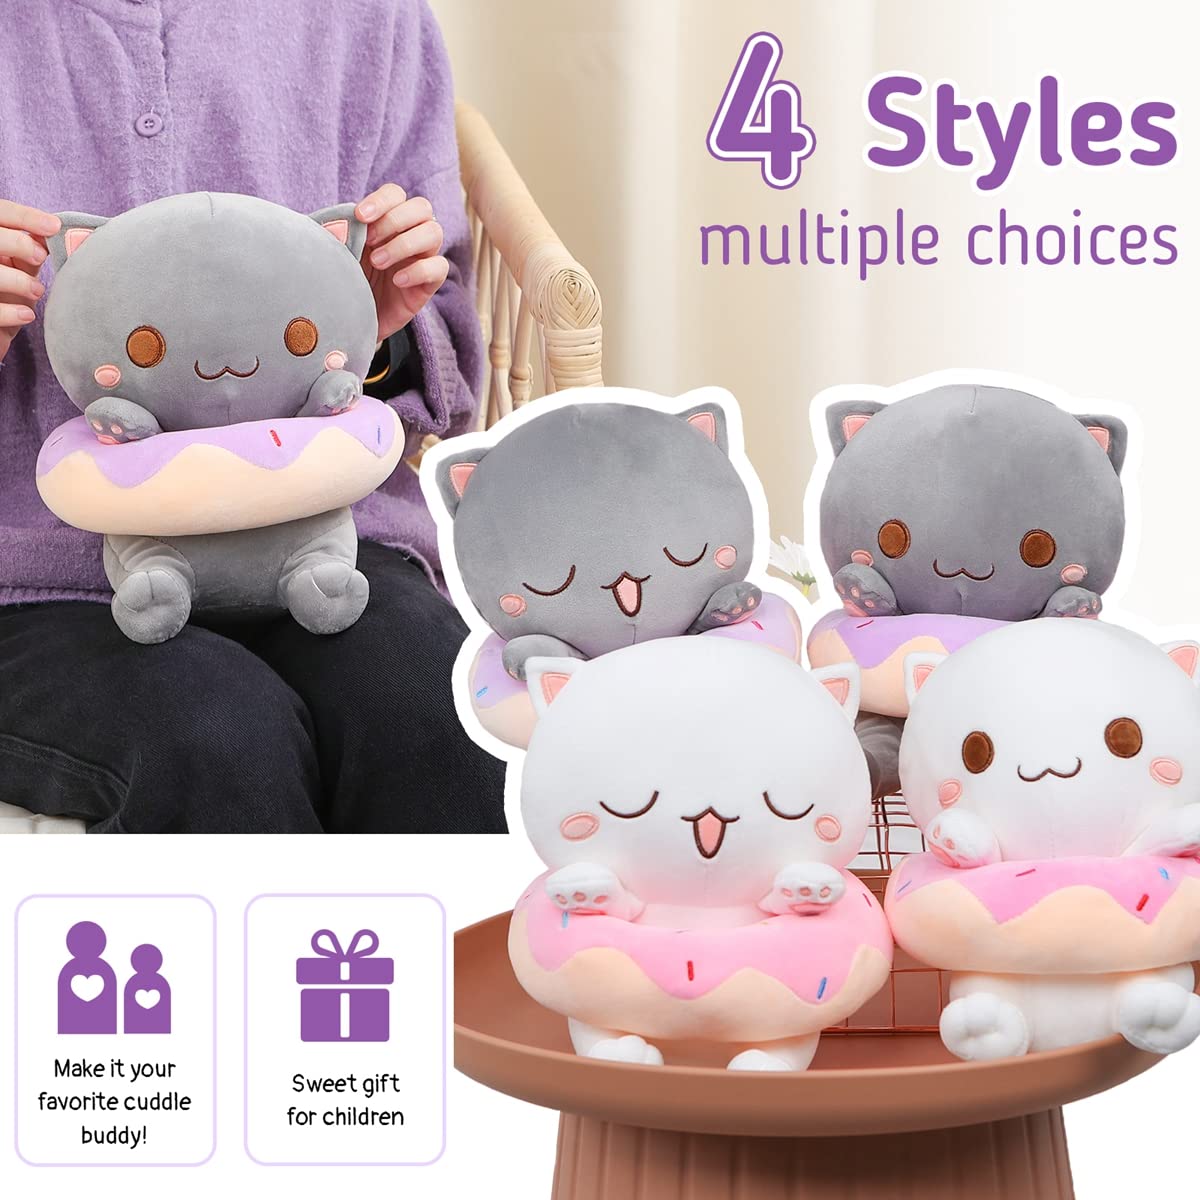 25 CM / 10 inch Cute cat plush, stuffed soft animal with donut, super soft cute gray happy kitten plush toy